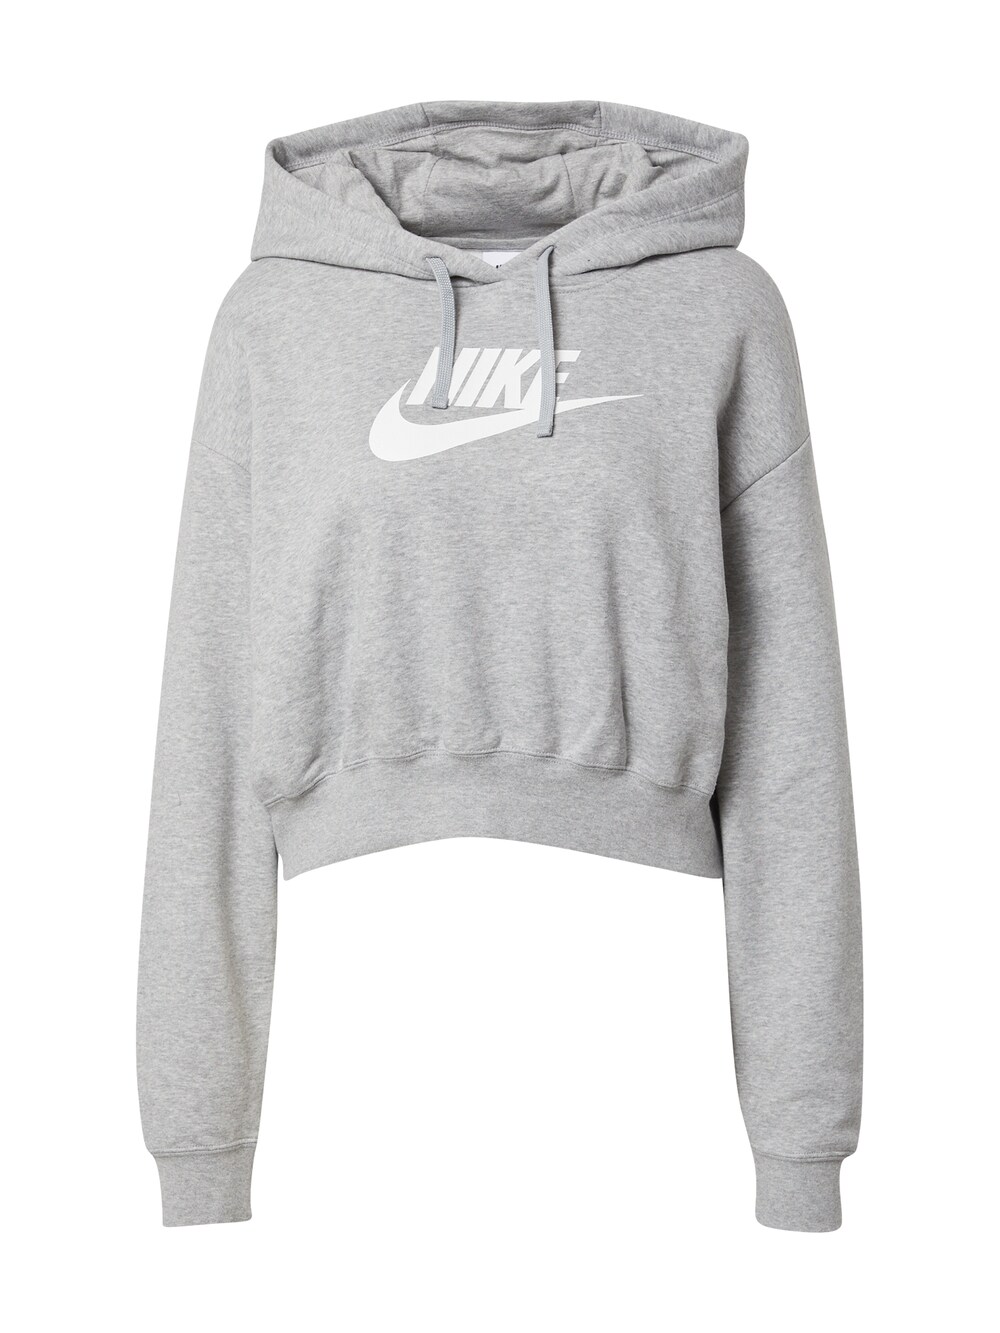 Толстовка Nike, пестрый серый